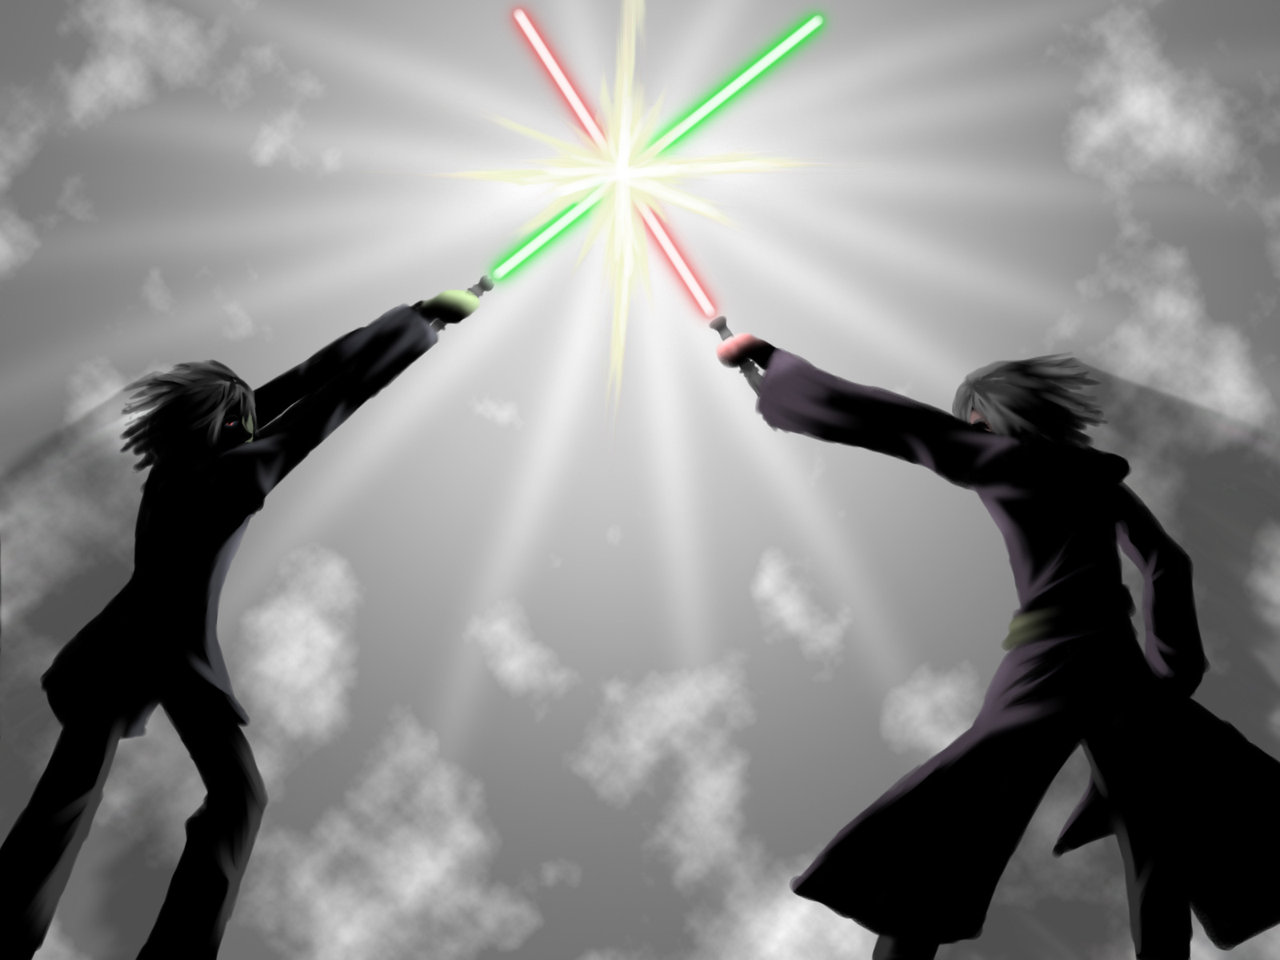 Jedi vs Sith lol by Xorte Renshe on